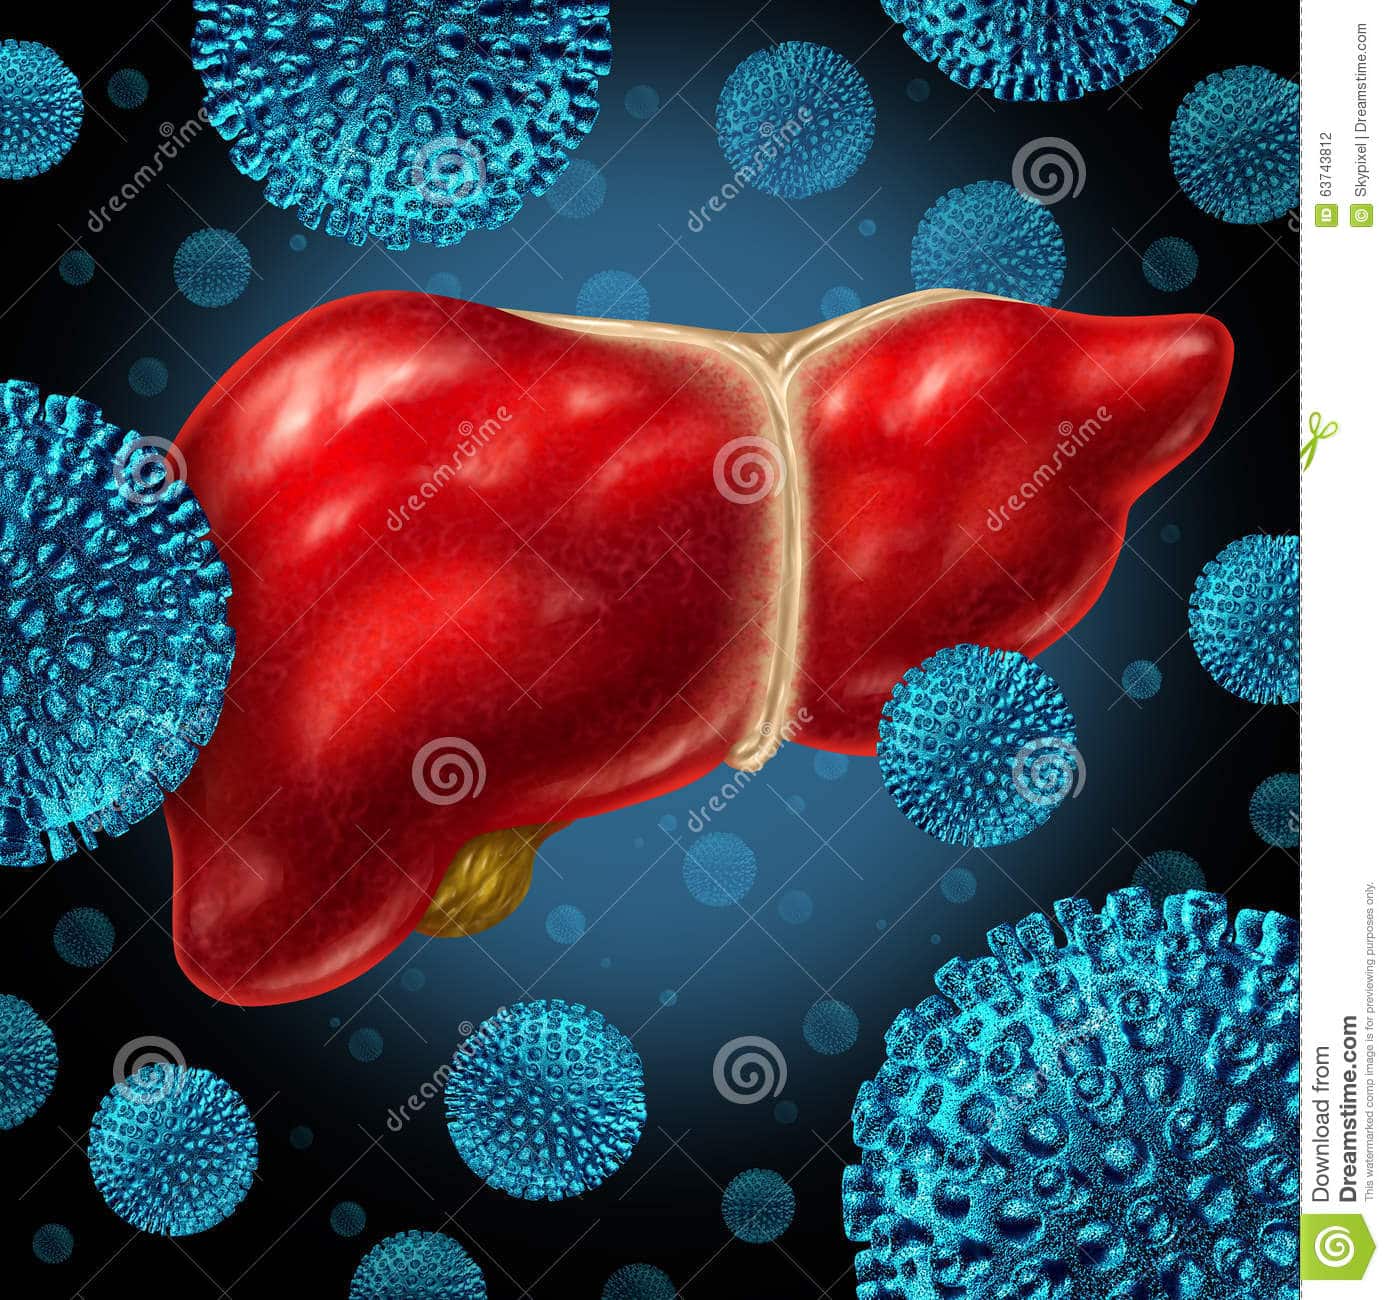 Hepatitis Liver Infection stock illustration. Illustration of health ...